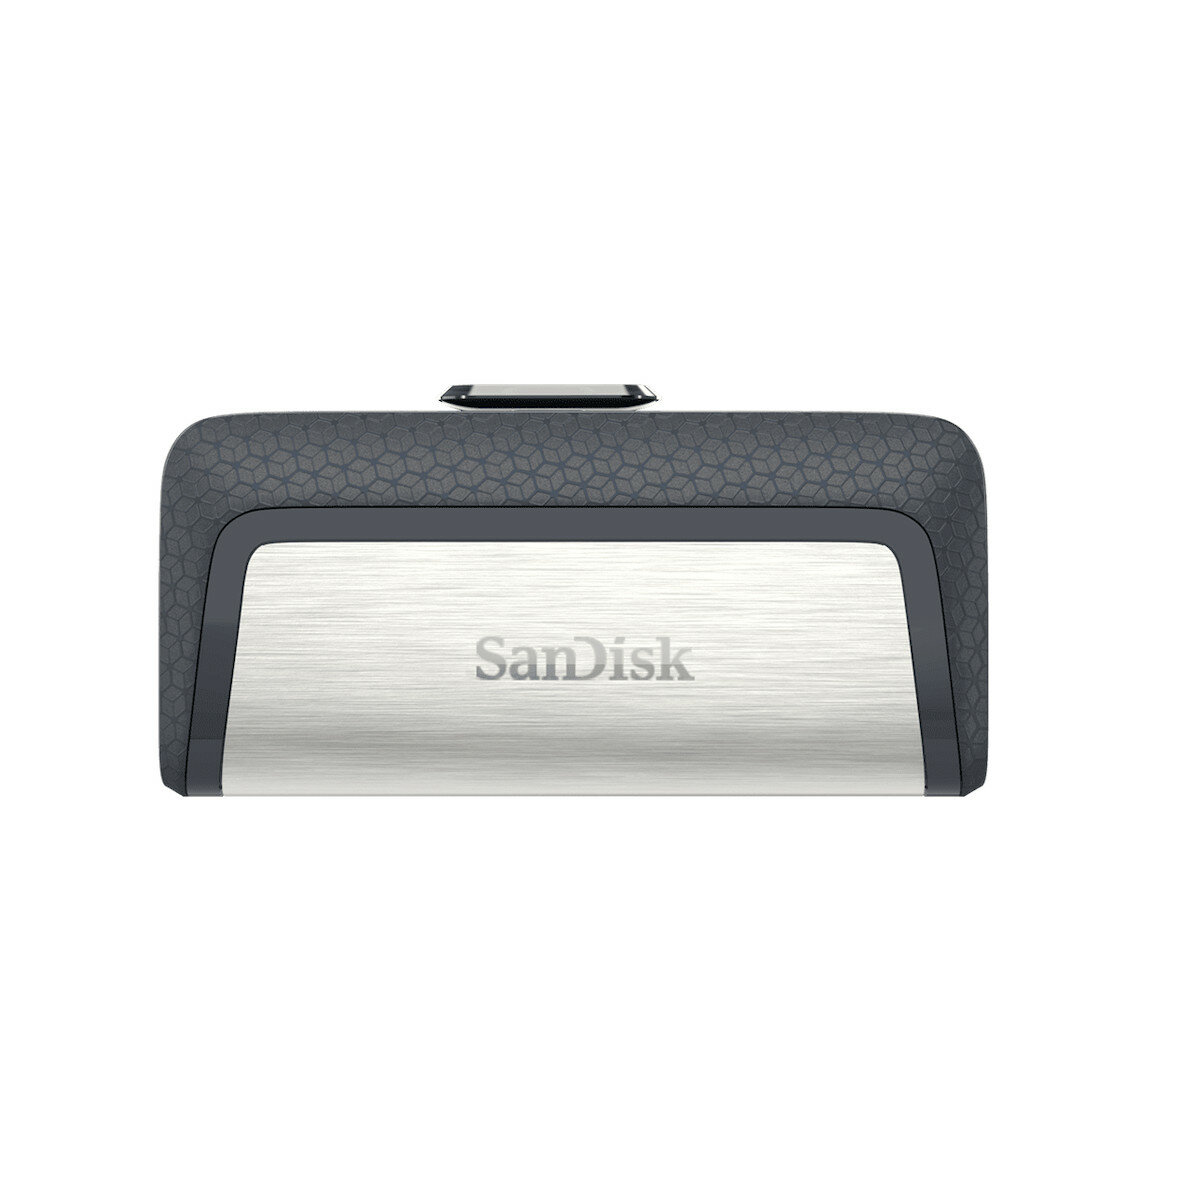 Pendrive SanDisk Ultra Dual Drive 256 GB widoczny frontem